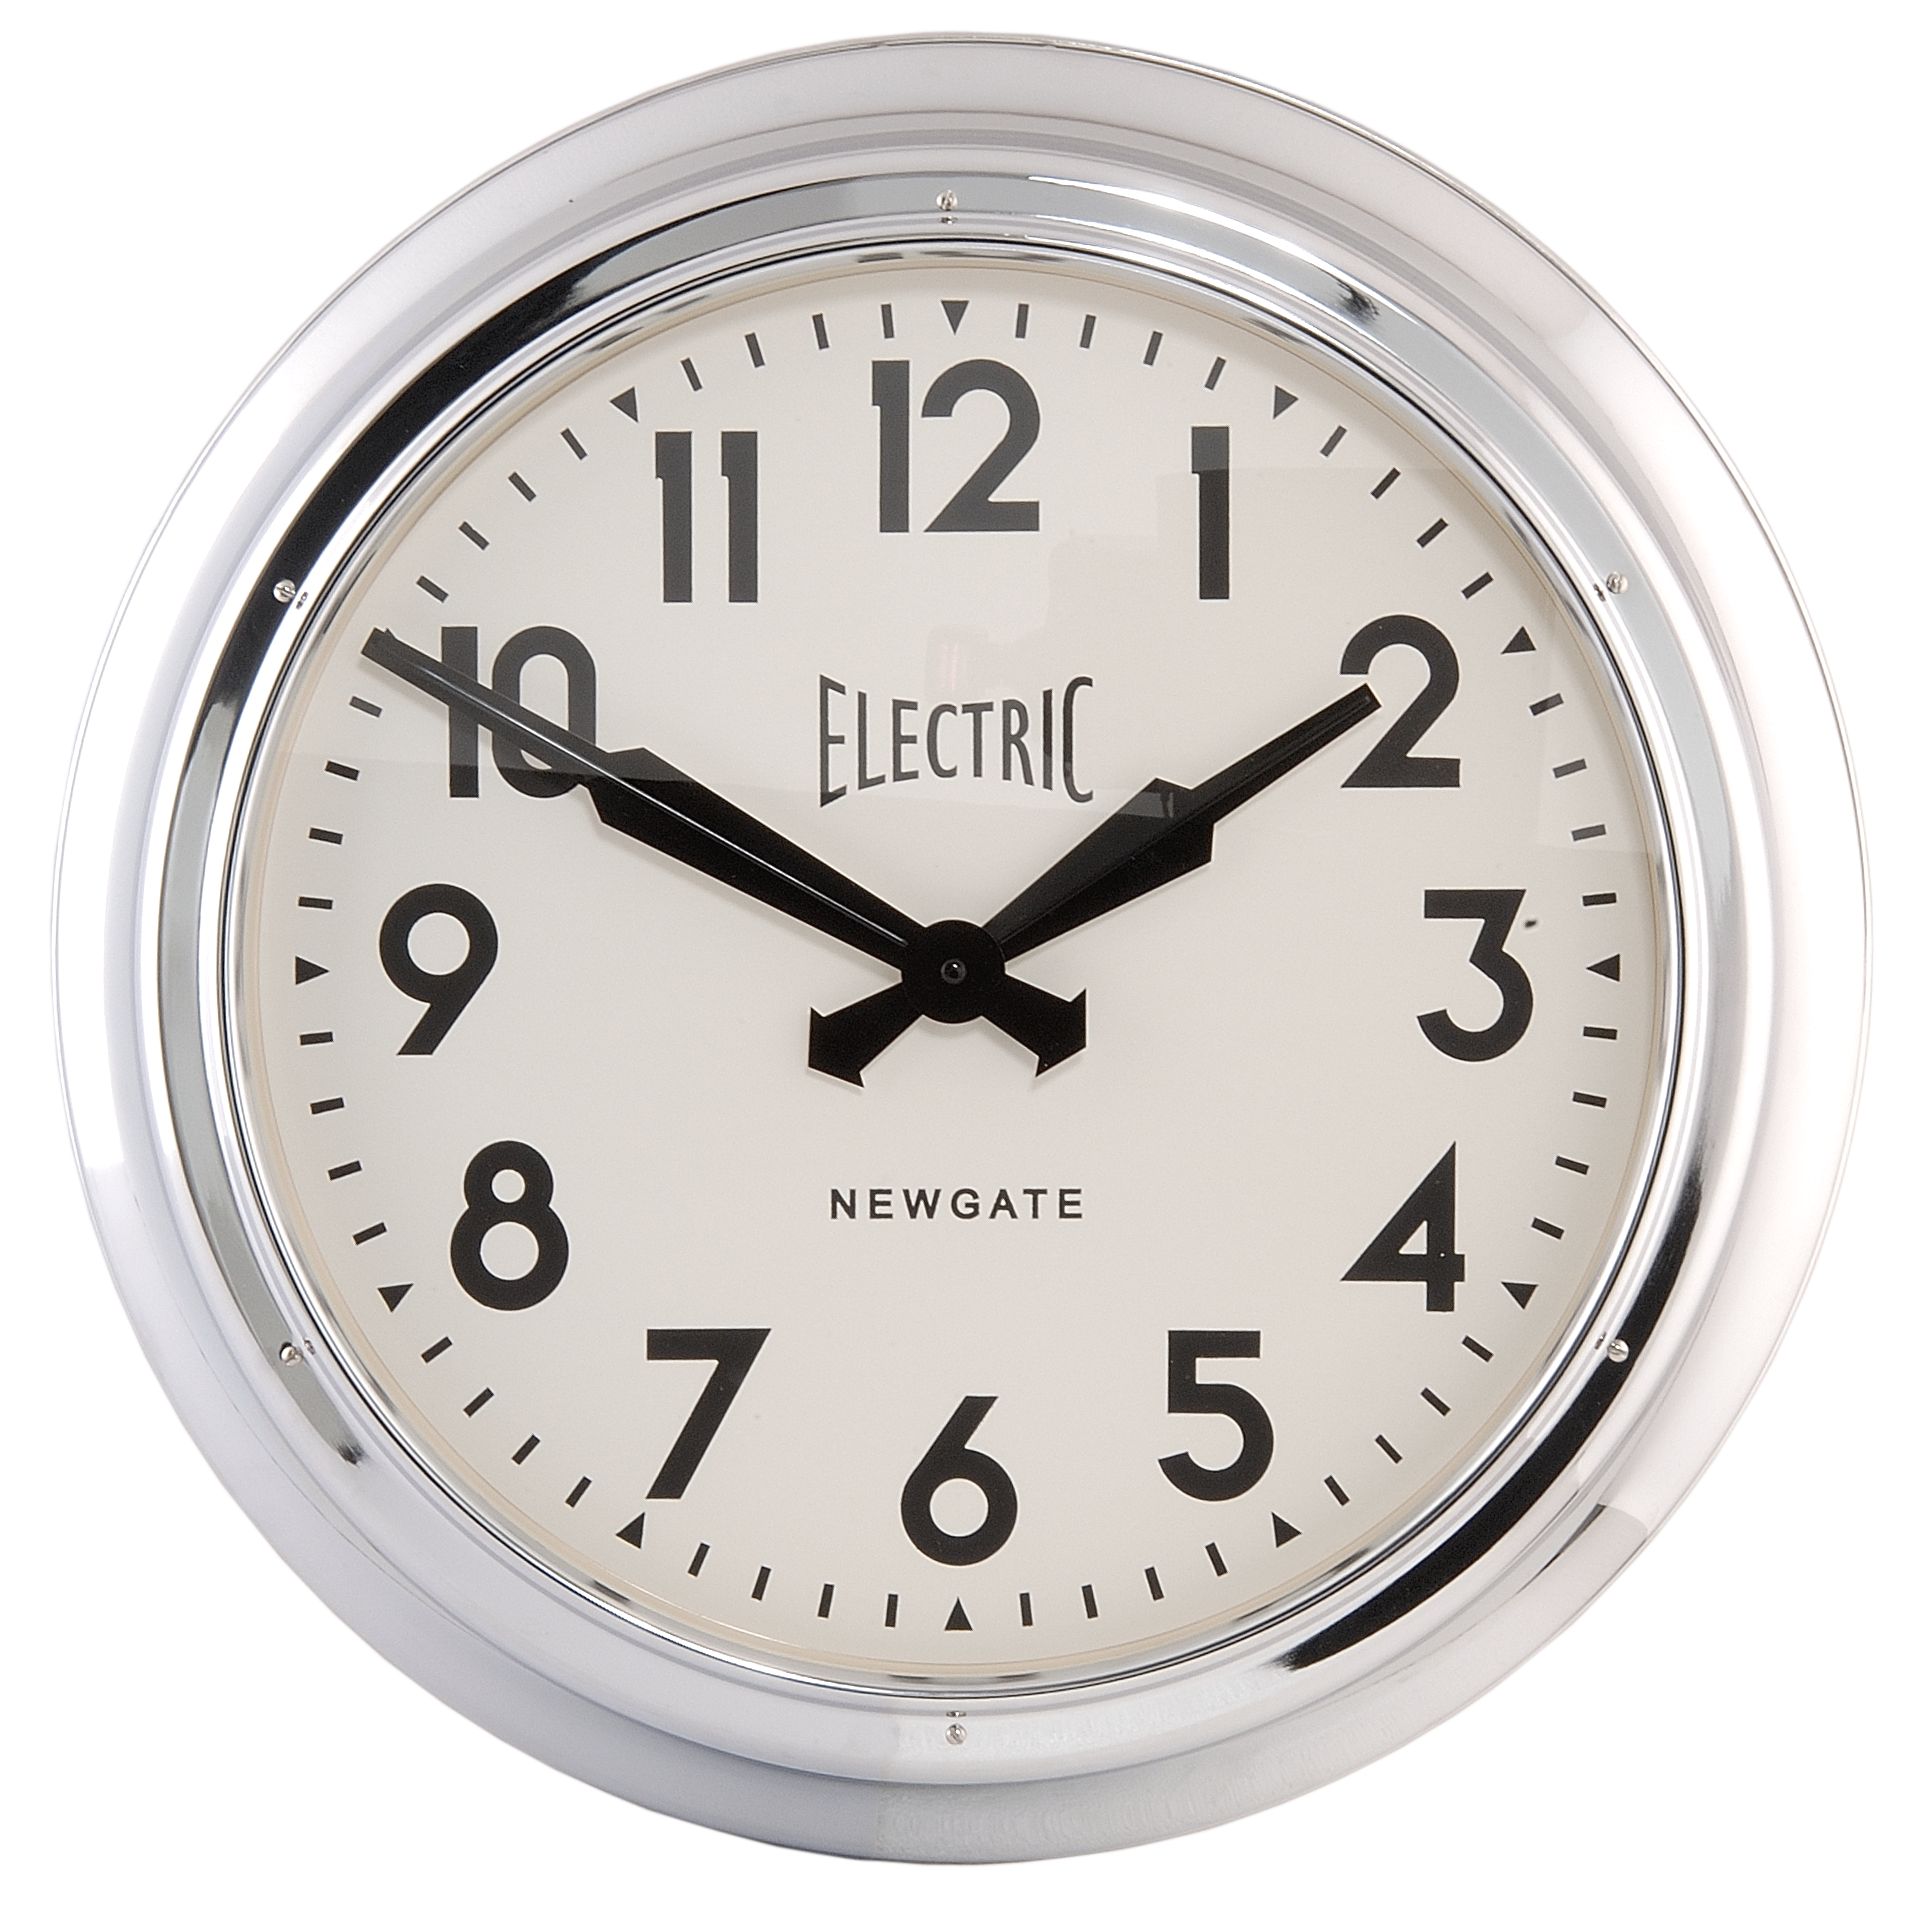 Newgate Electric Wall Clock